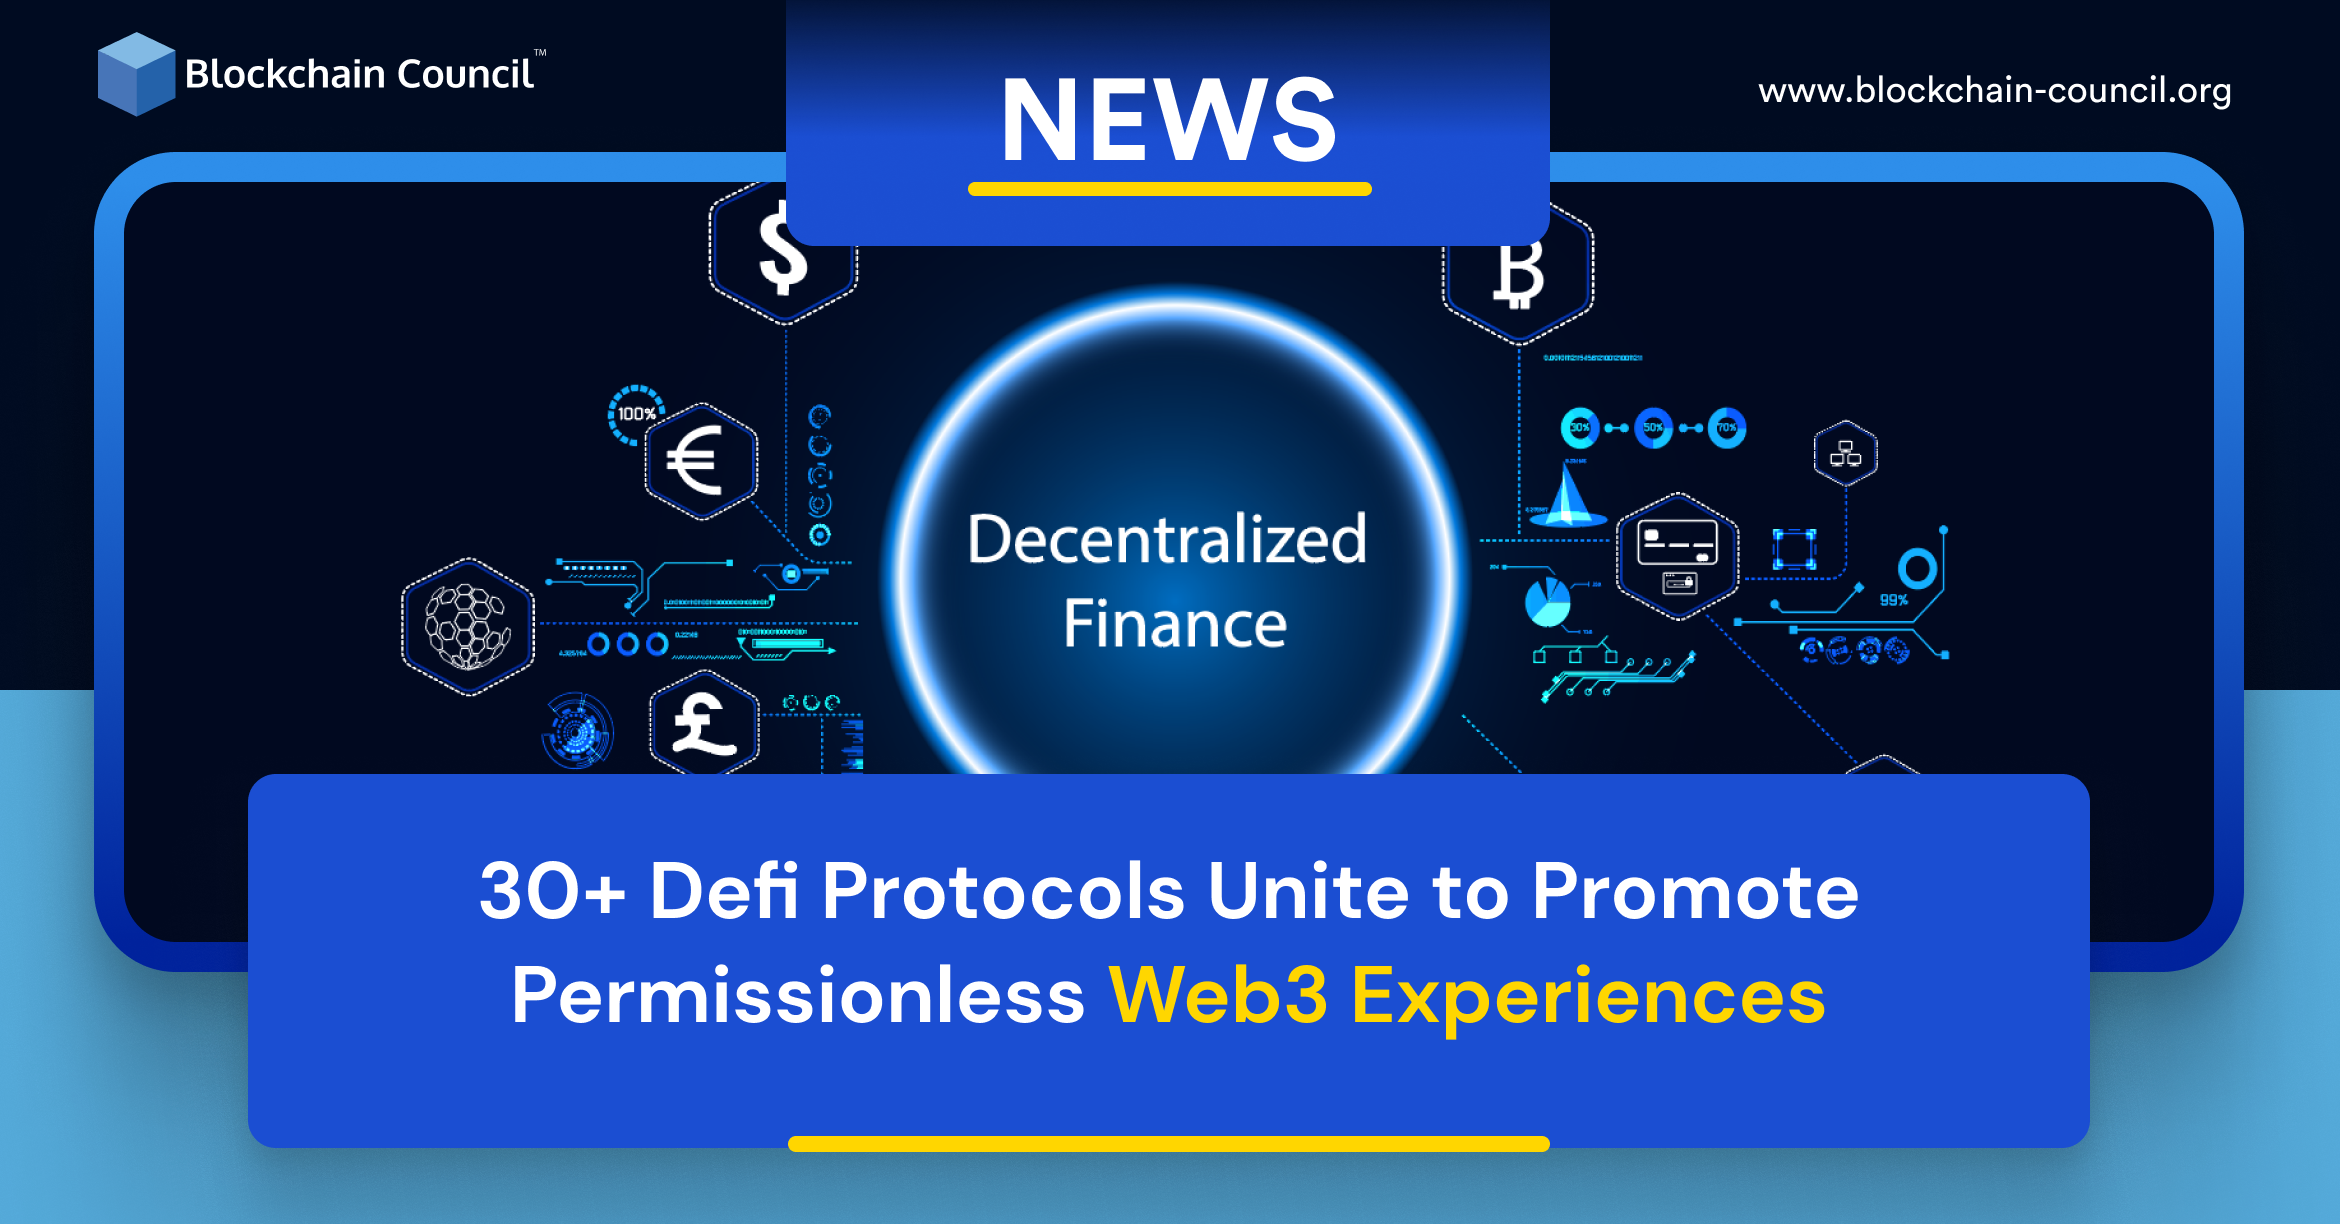 30+ Defi Protocols Unite to Promote Permissionless Web3 Experiences